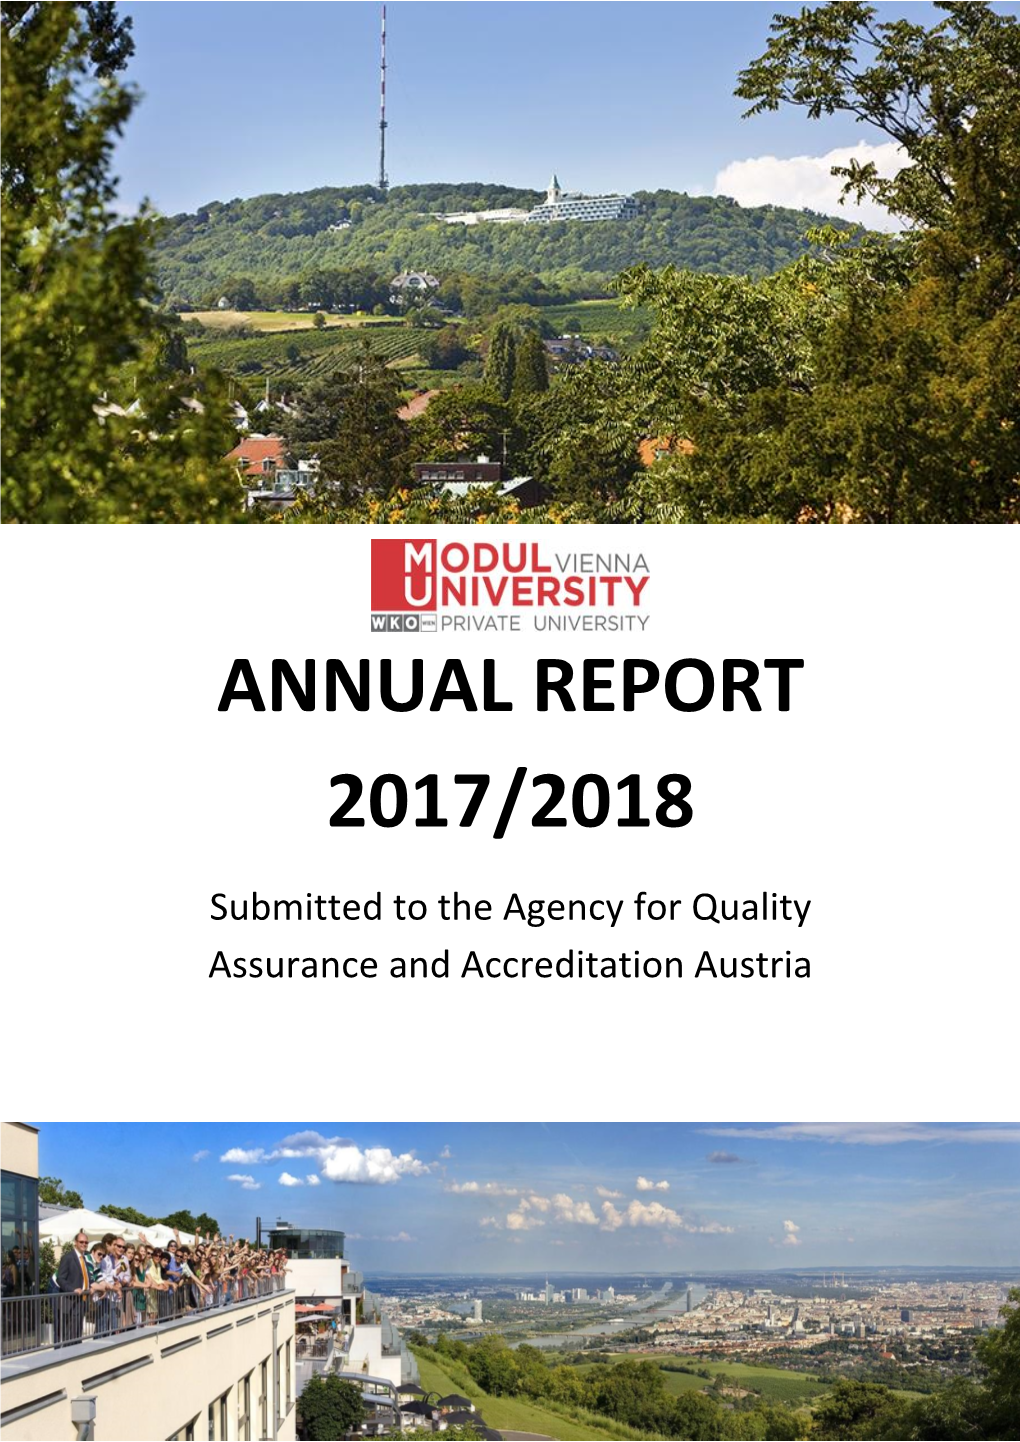 Modul University Vienna's Annual Report 2017-2018